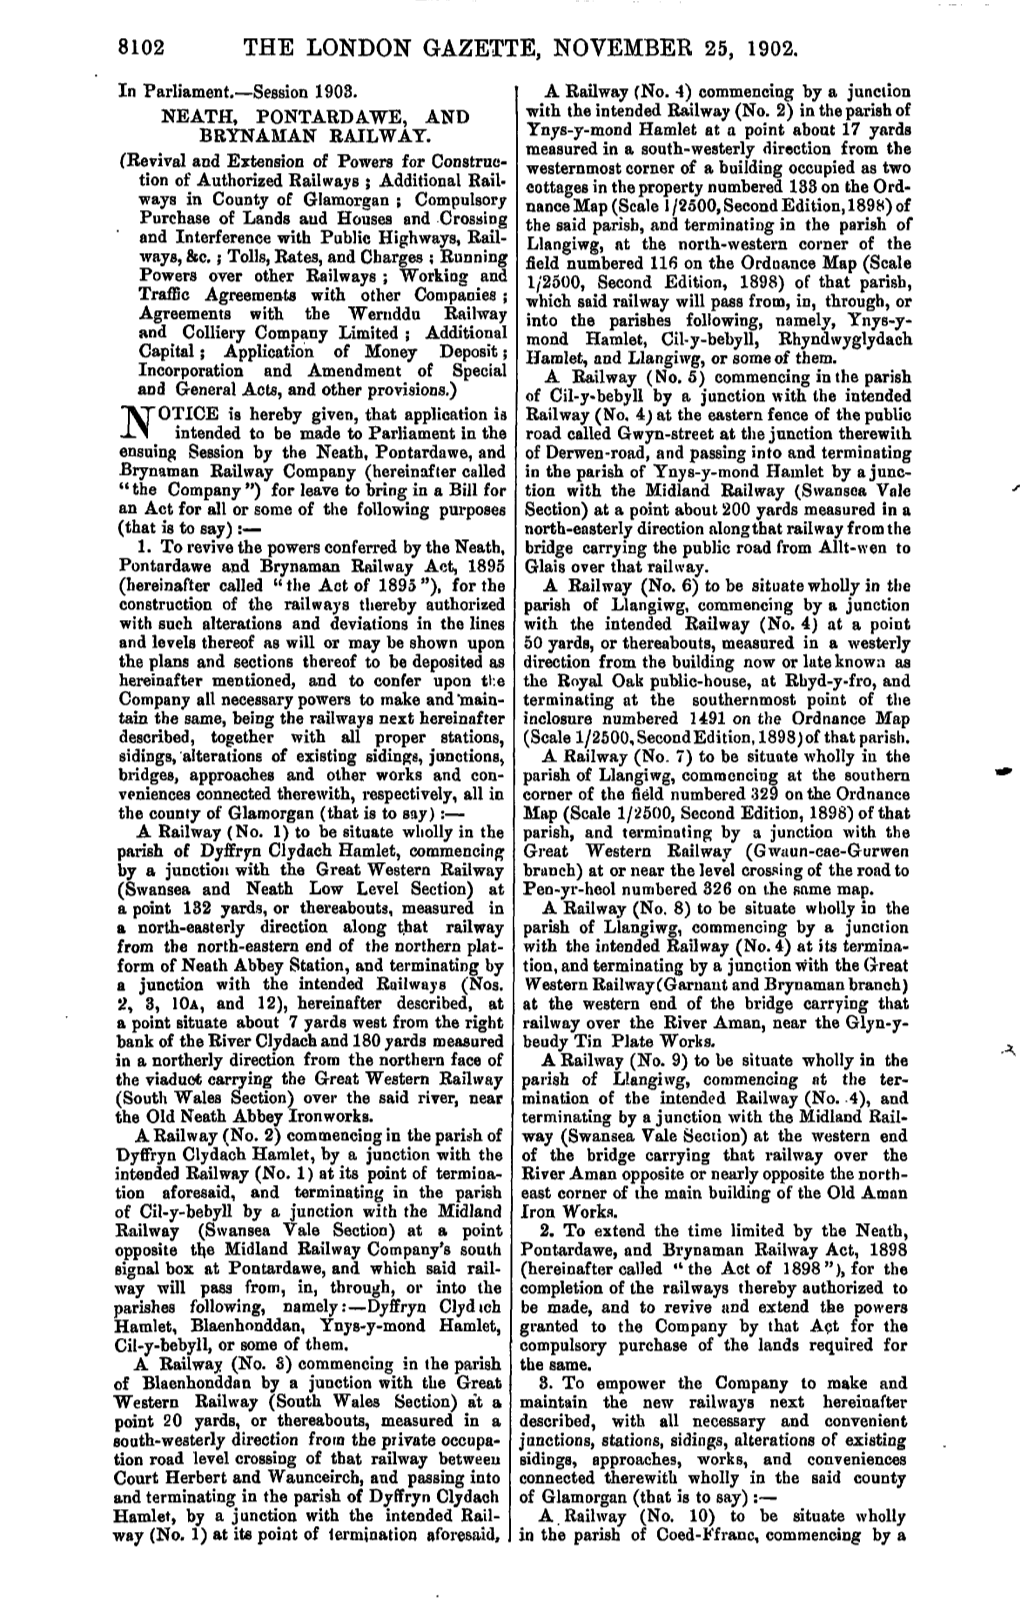 The London Gazette, November 25, 1902